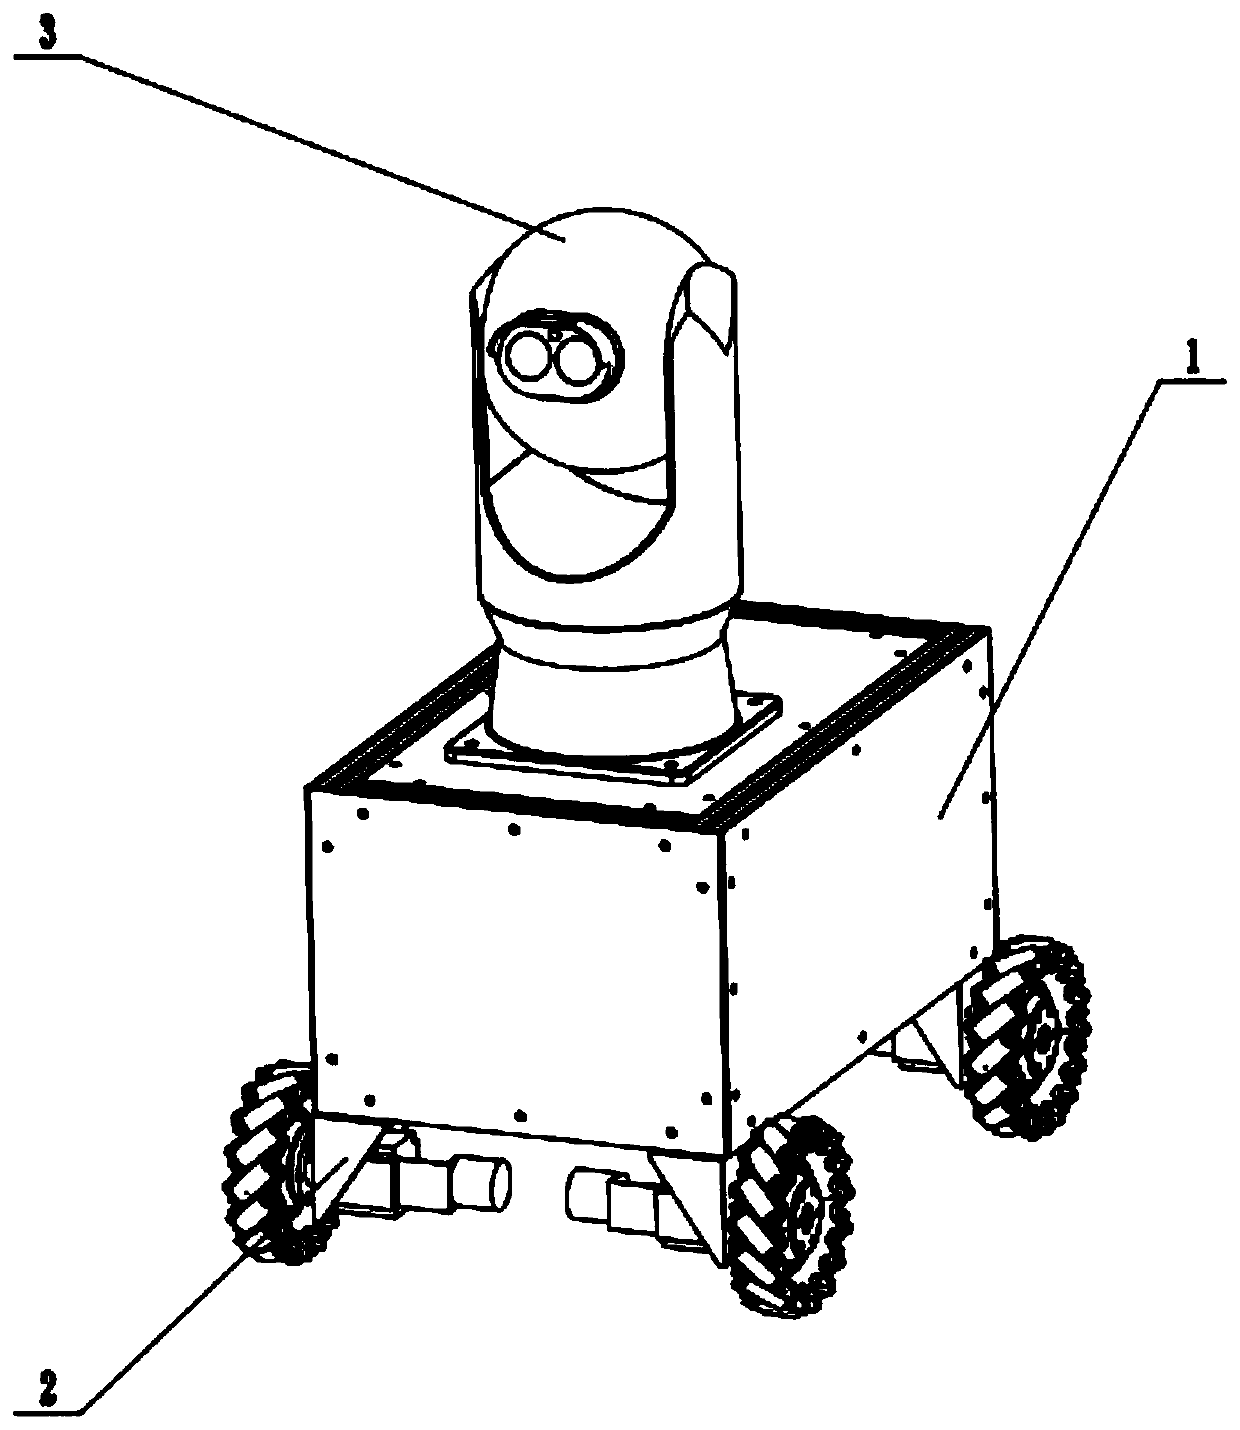 Tunnel water seepage detection omnidirectional mobile robot based on binocular vision